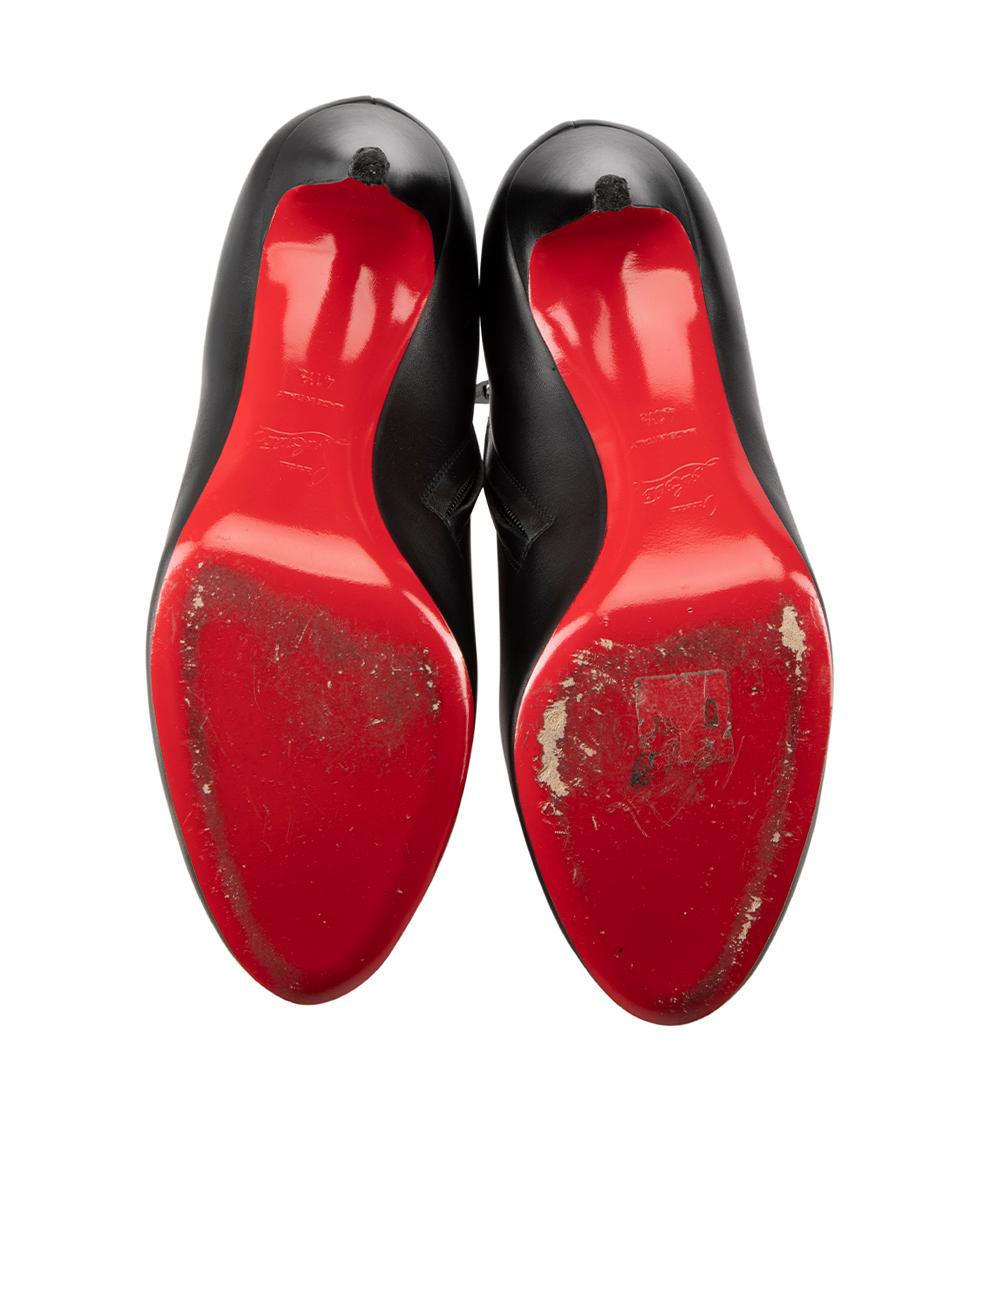 Women's Christian Louboutin Black Almond Toe Ankle Boots Size IT 41.5